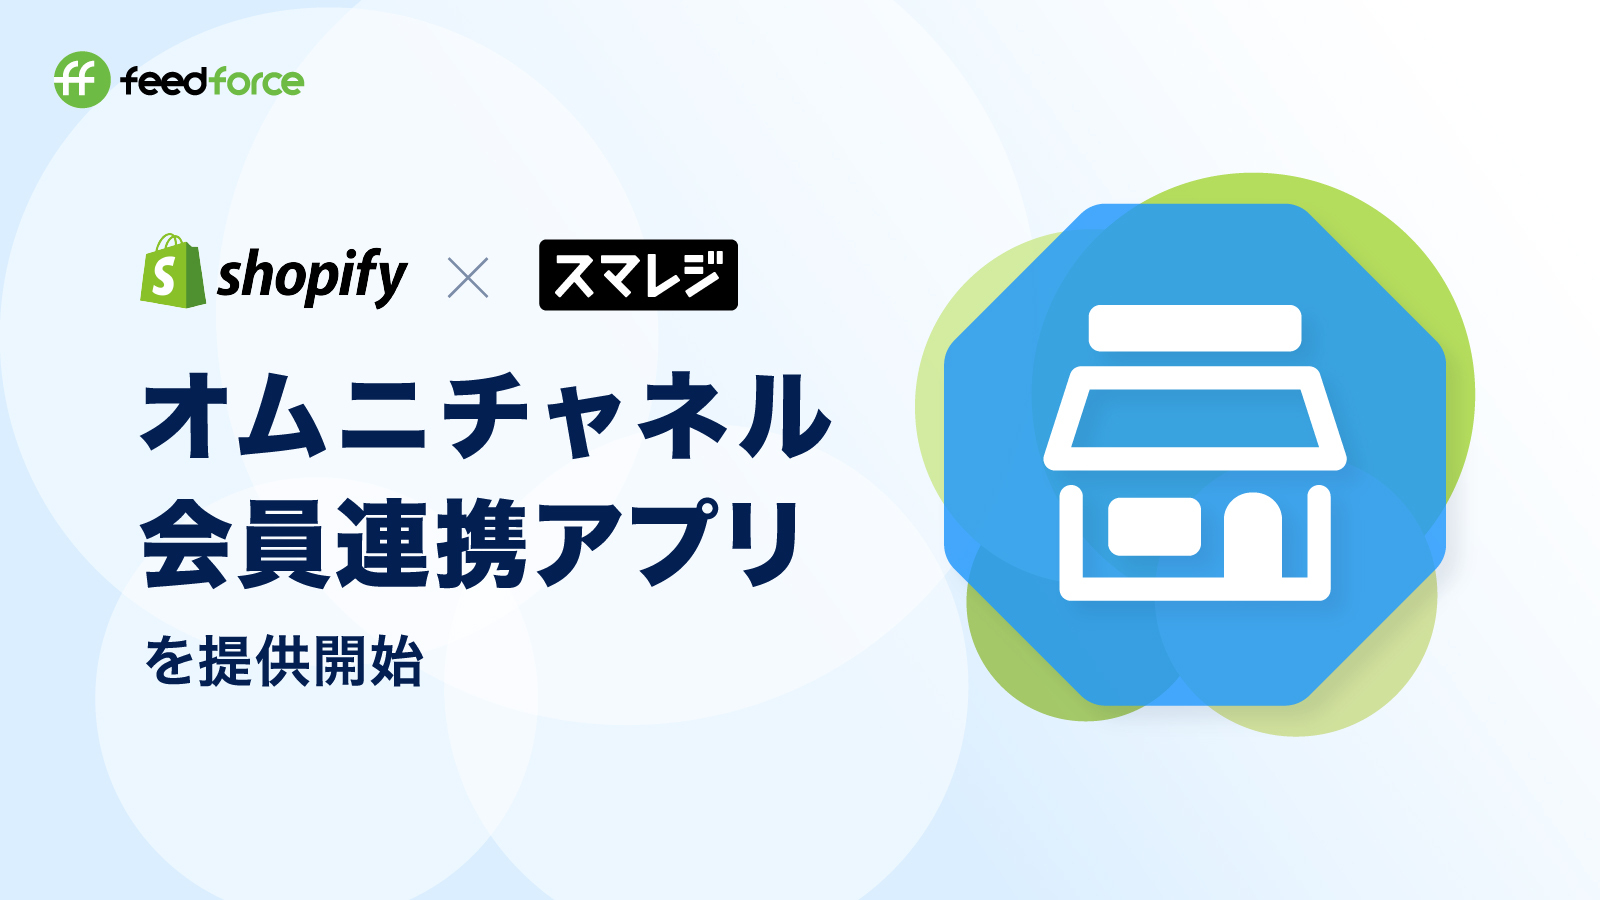 Shopifyとスマレジ間で会員情報を連携するオムニチャネルアプリ Omni Hub を提供開始 株式会社フィードフォースのプレスリリース